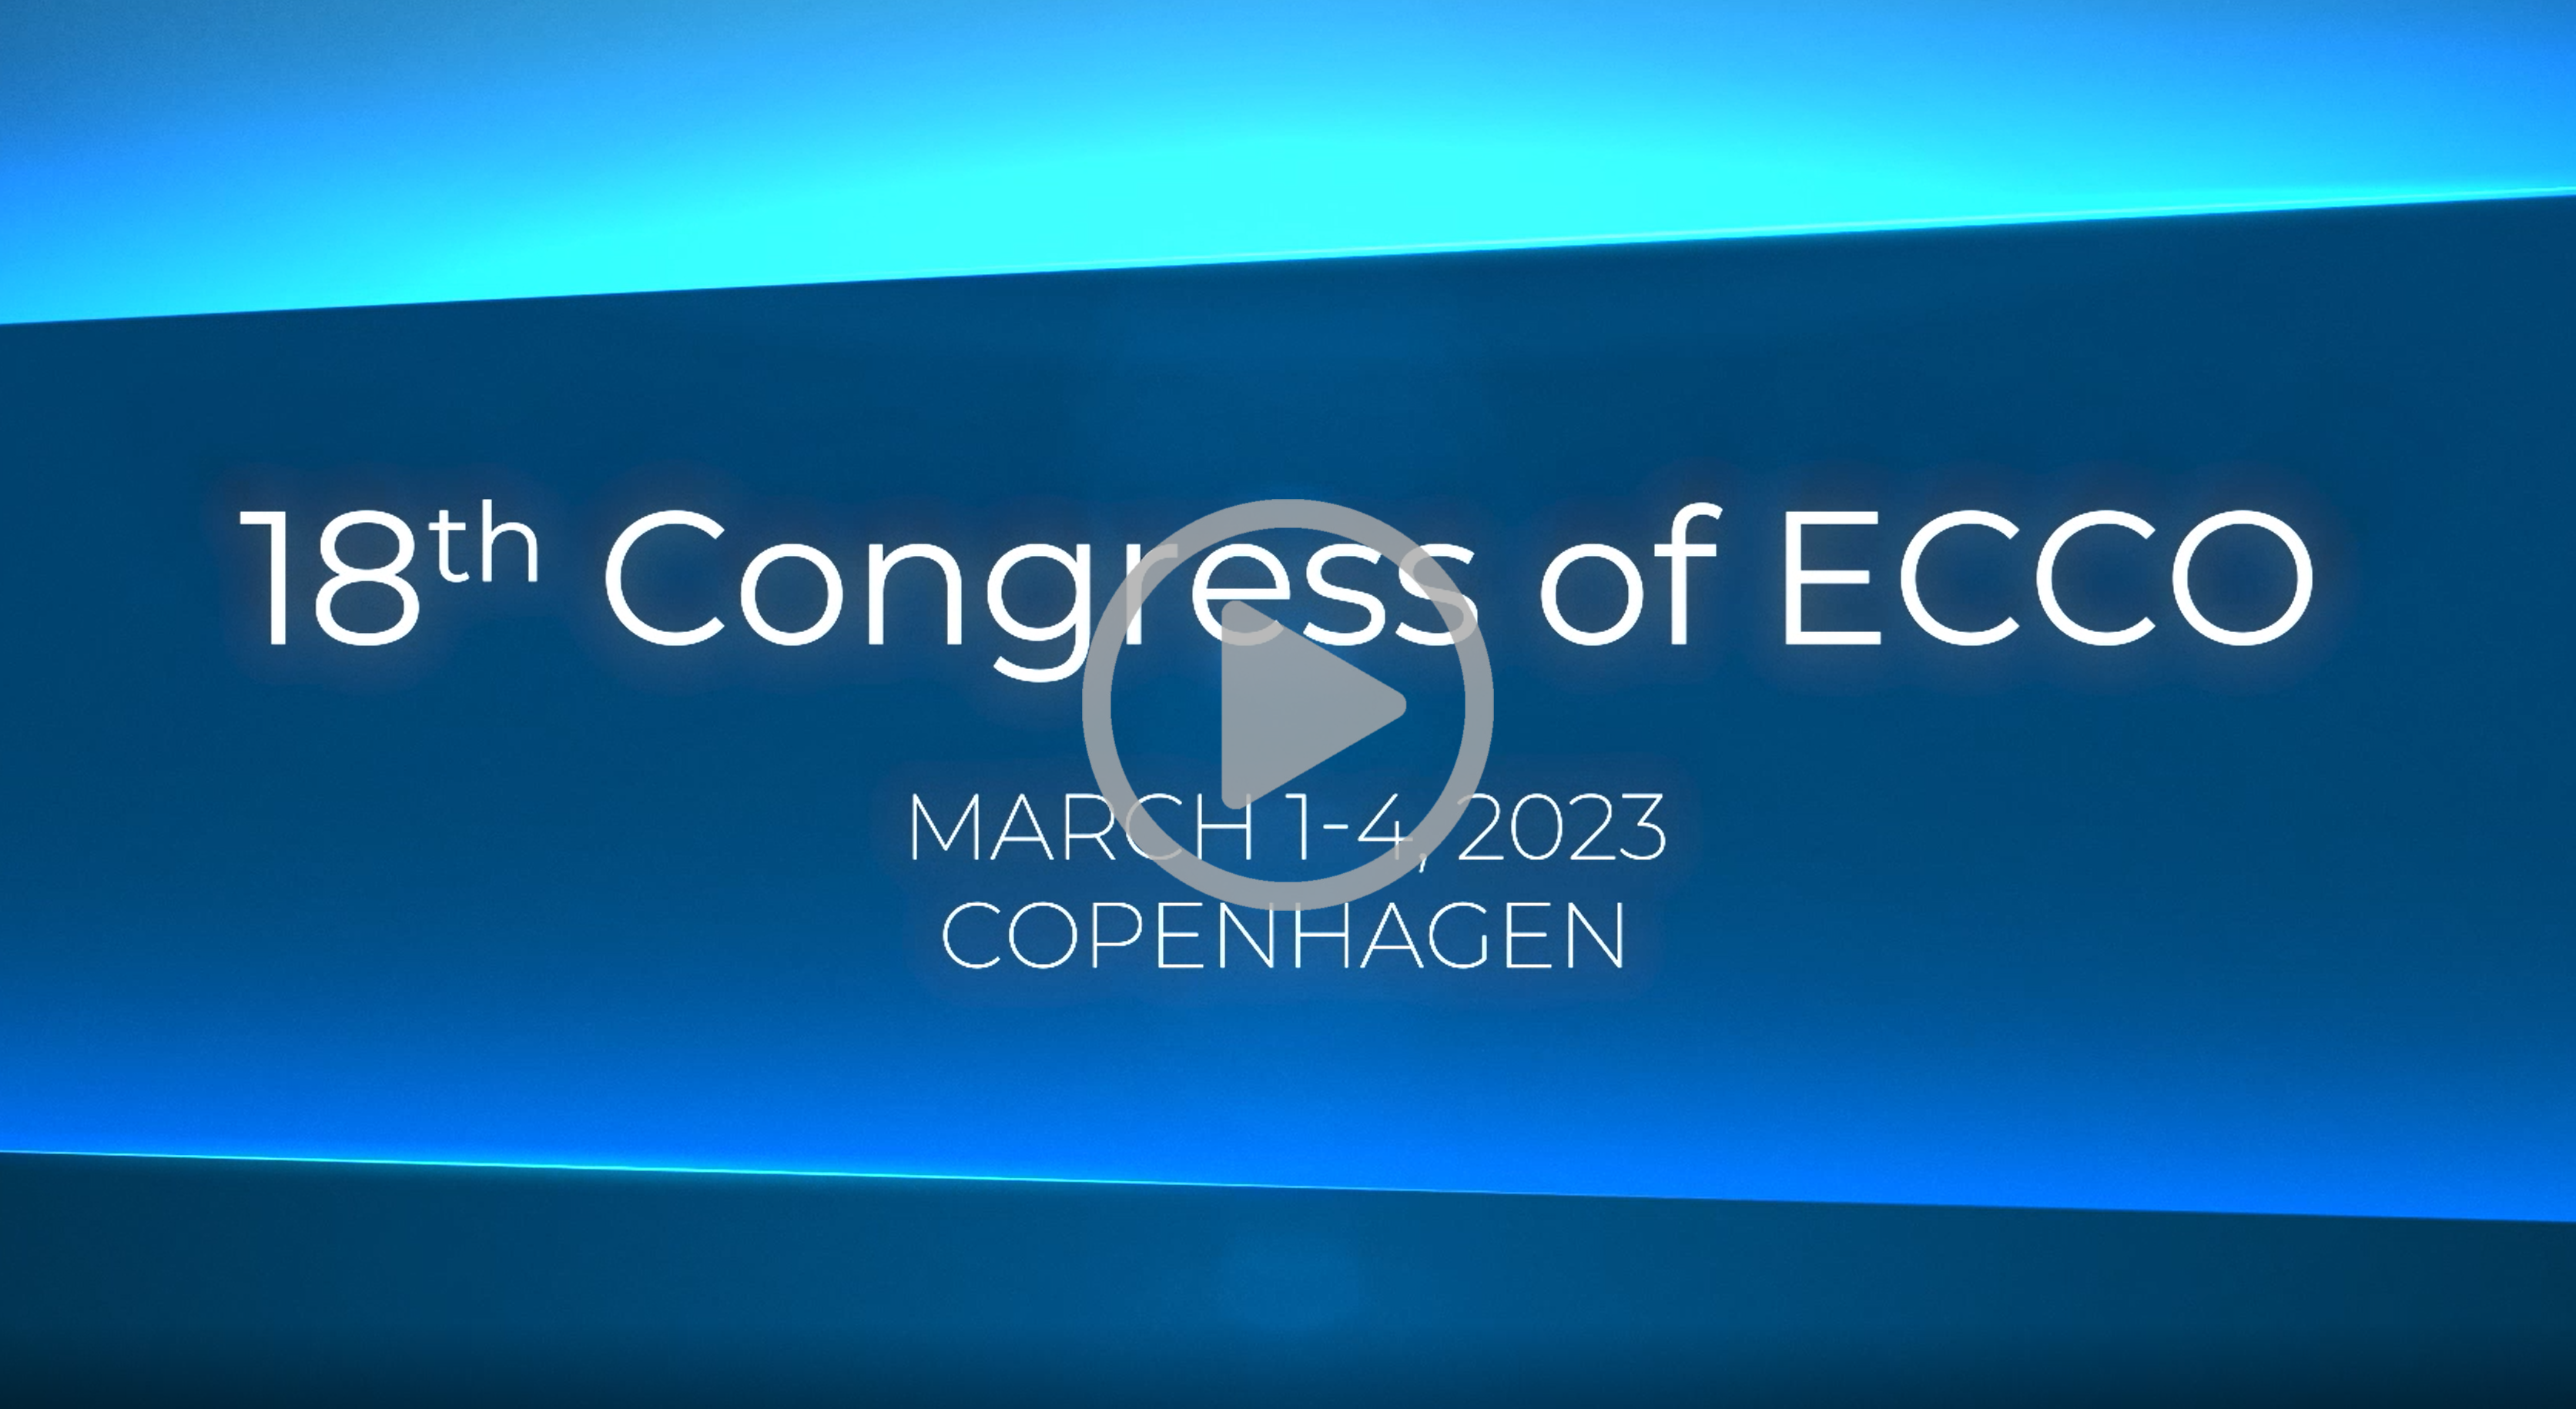 ECCO'23 CONGRESS Registration open now!